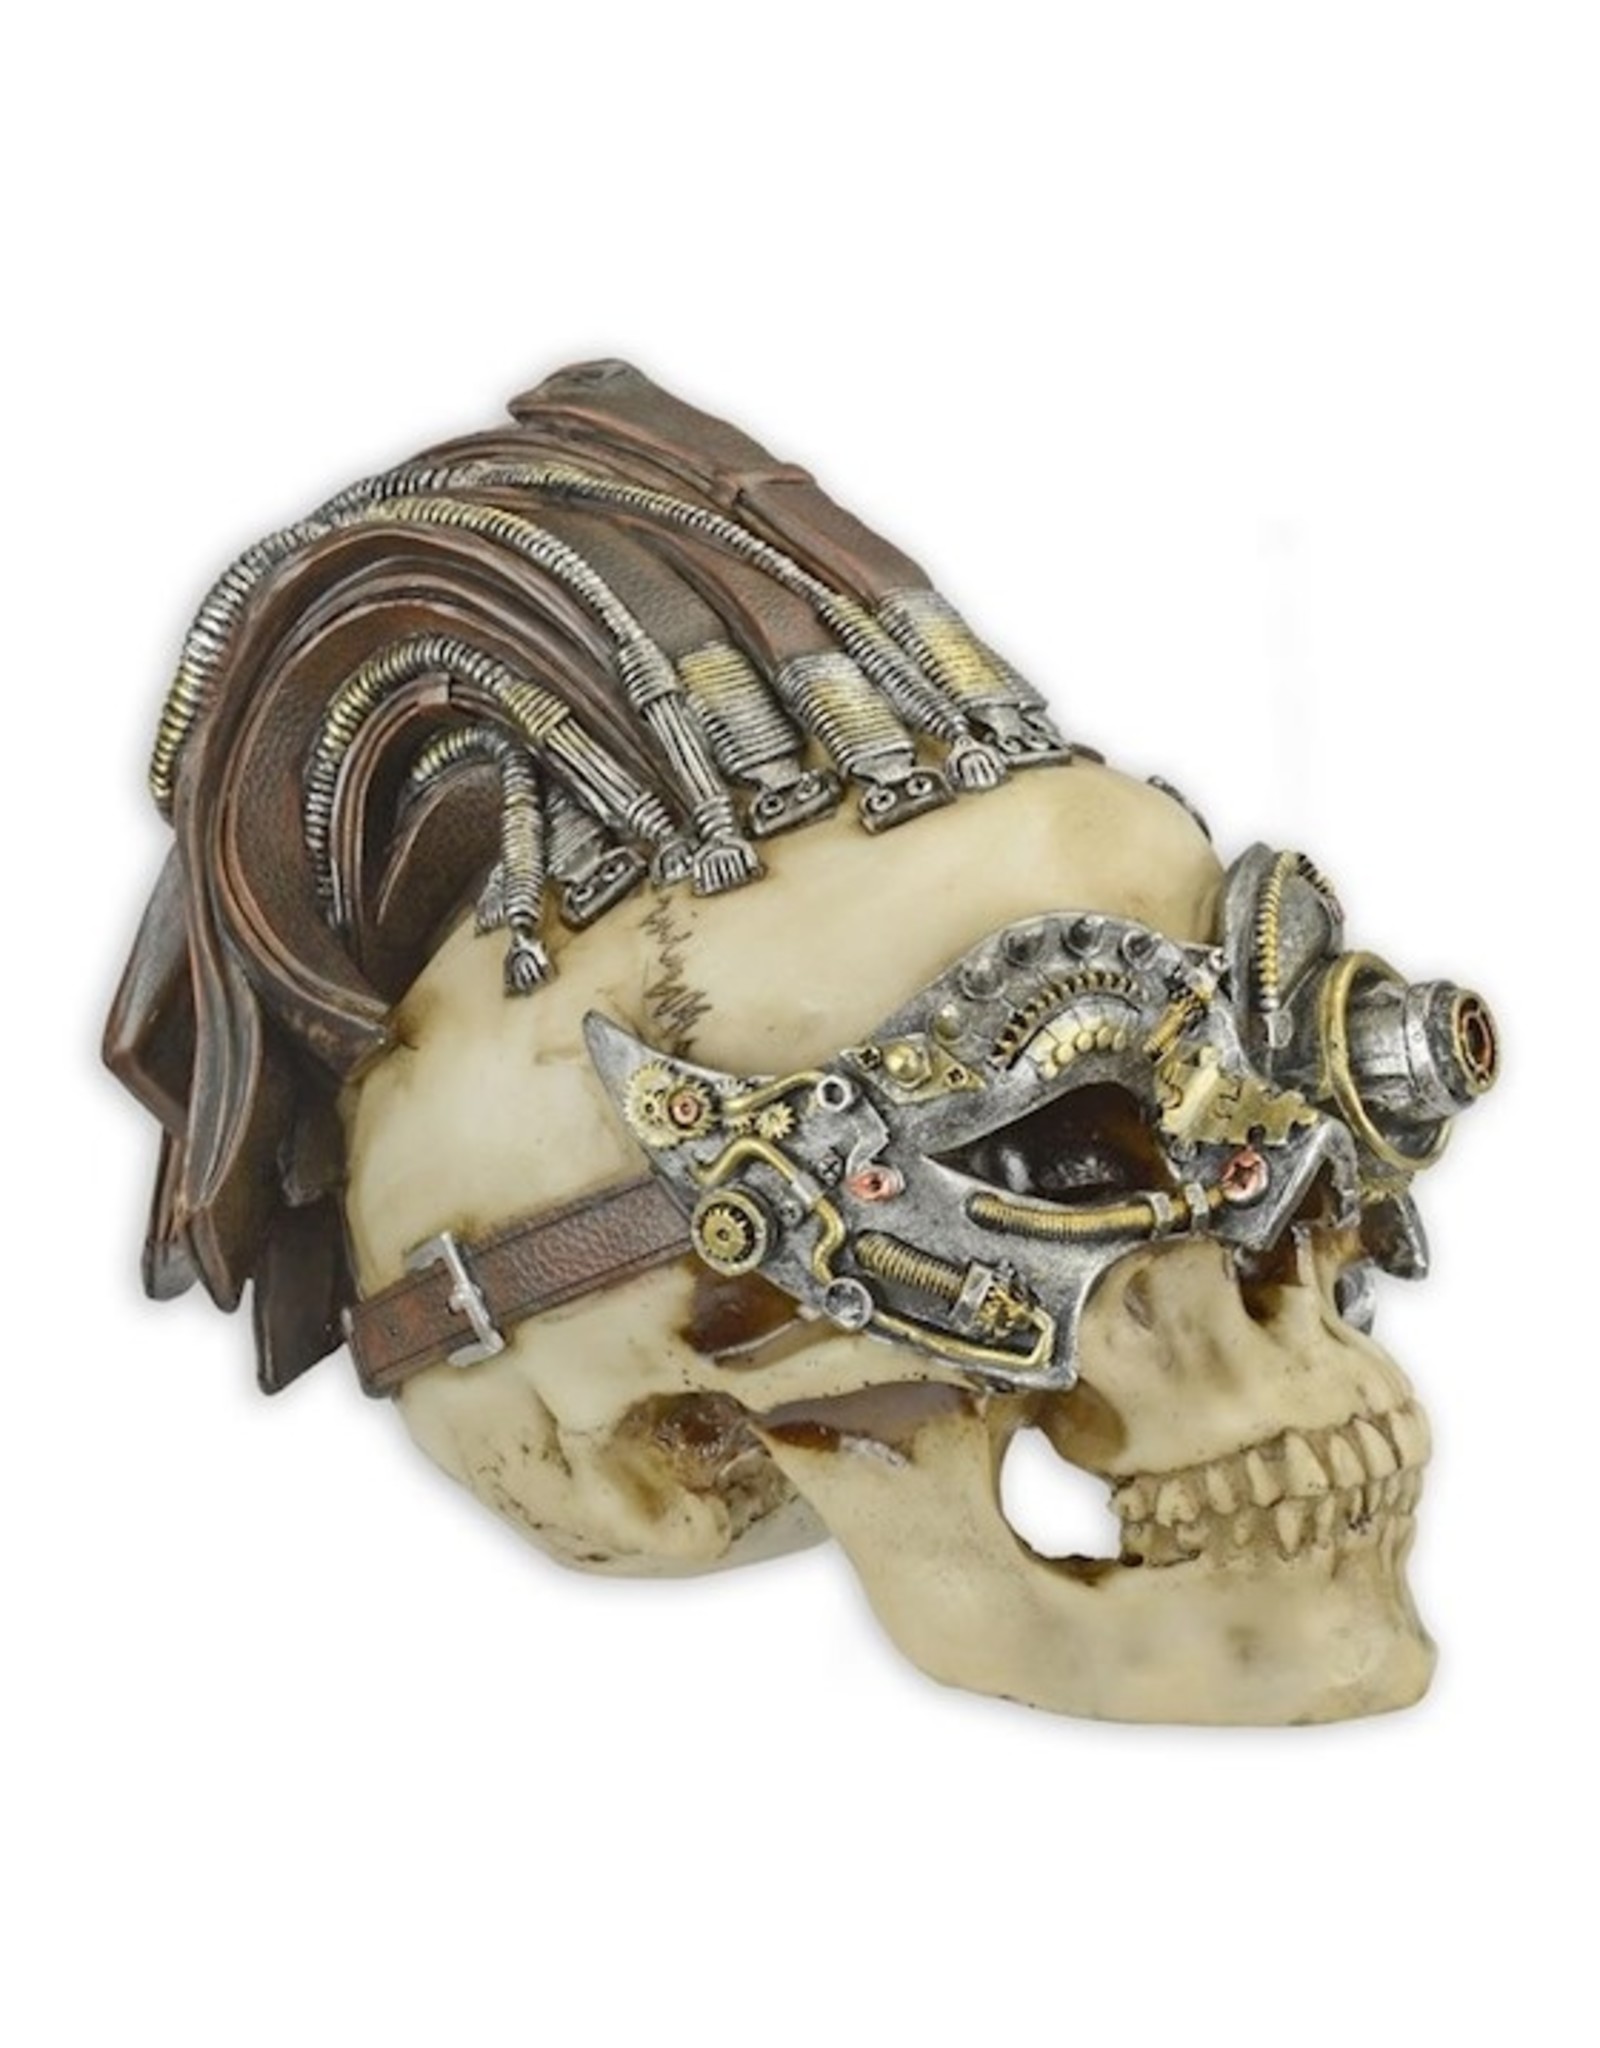 Trukado Skulls - Stempunk  Masked Skull with Dreads large